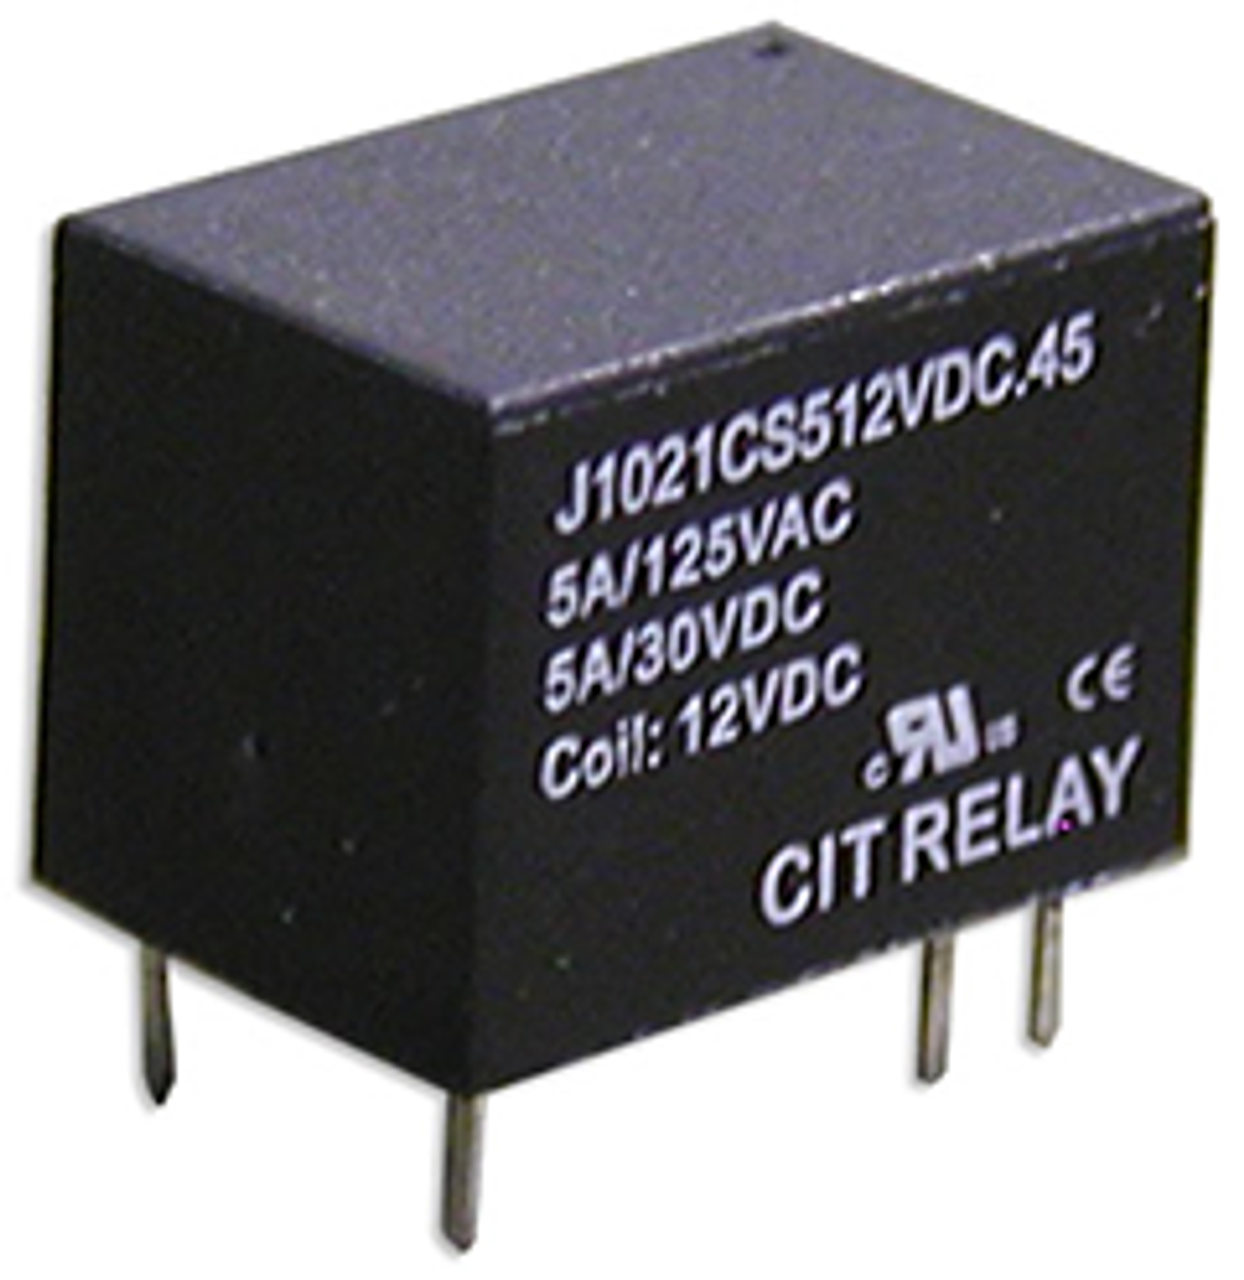 CIT Relay and Switch J1021CS3P6VDC.45 Power Relays